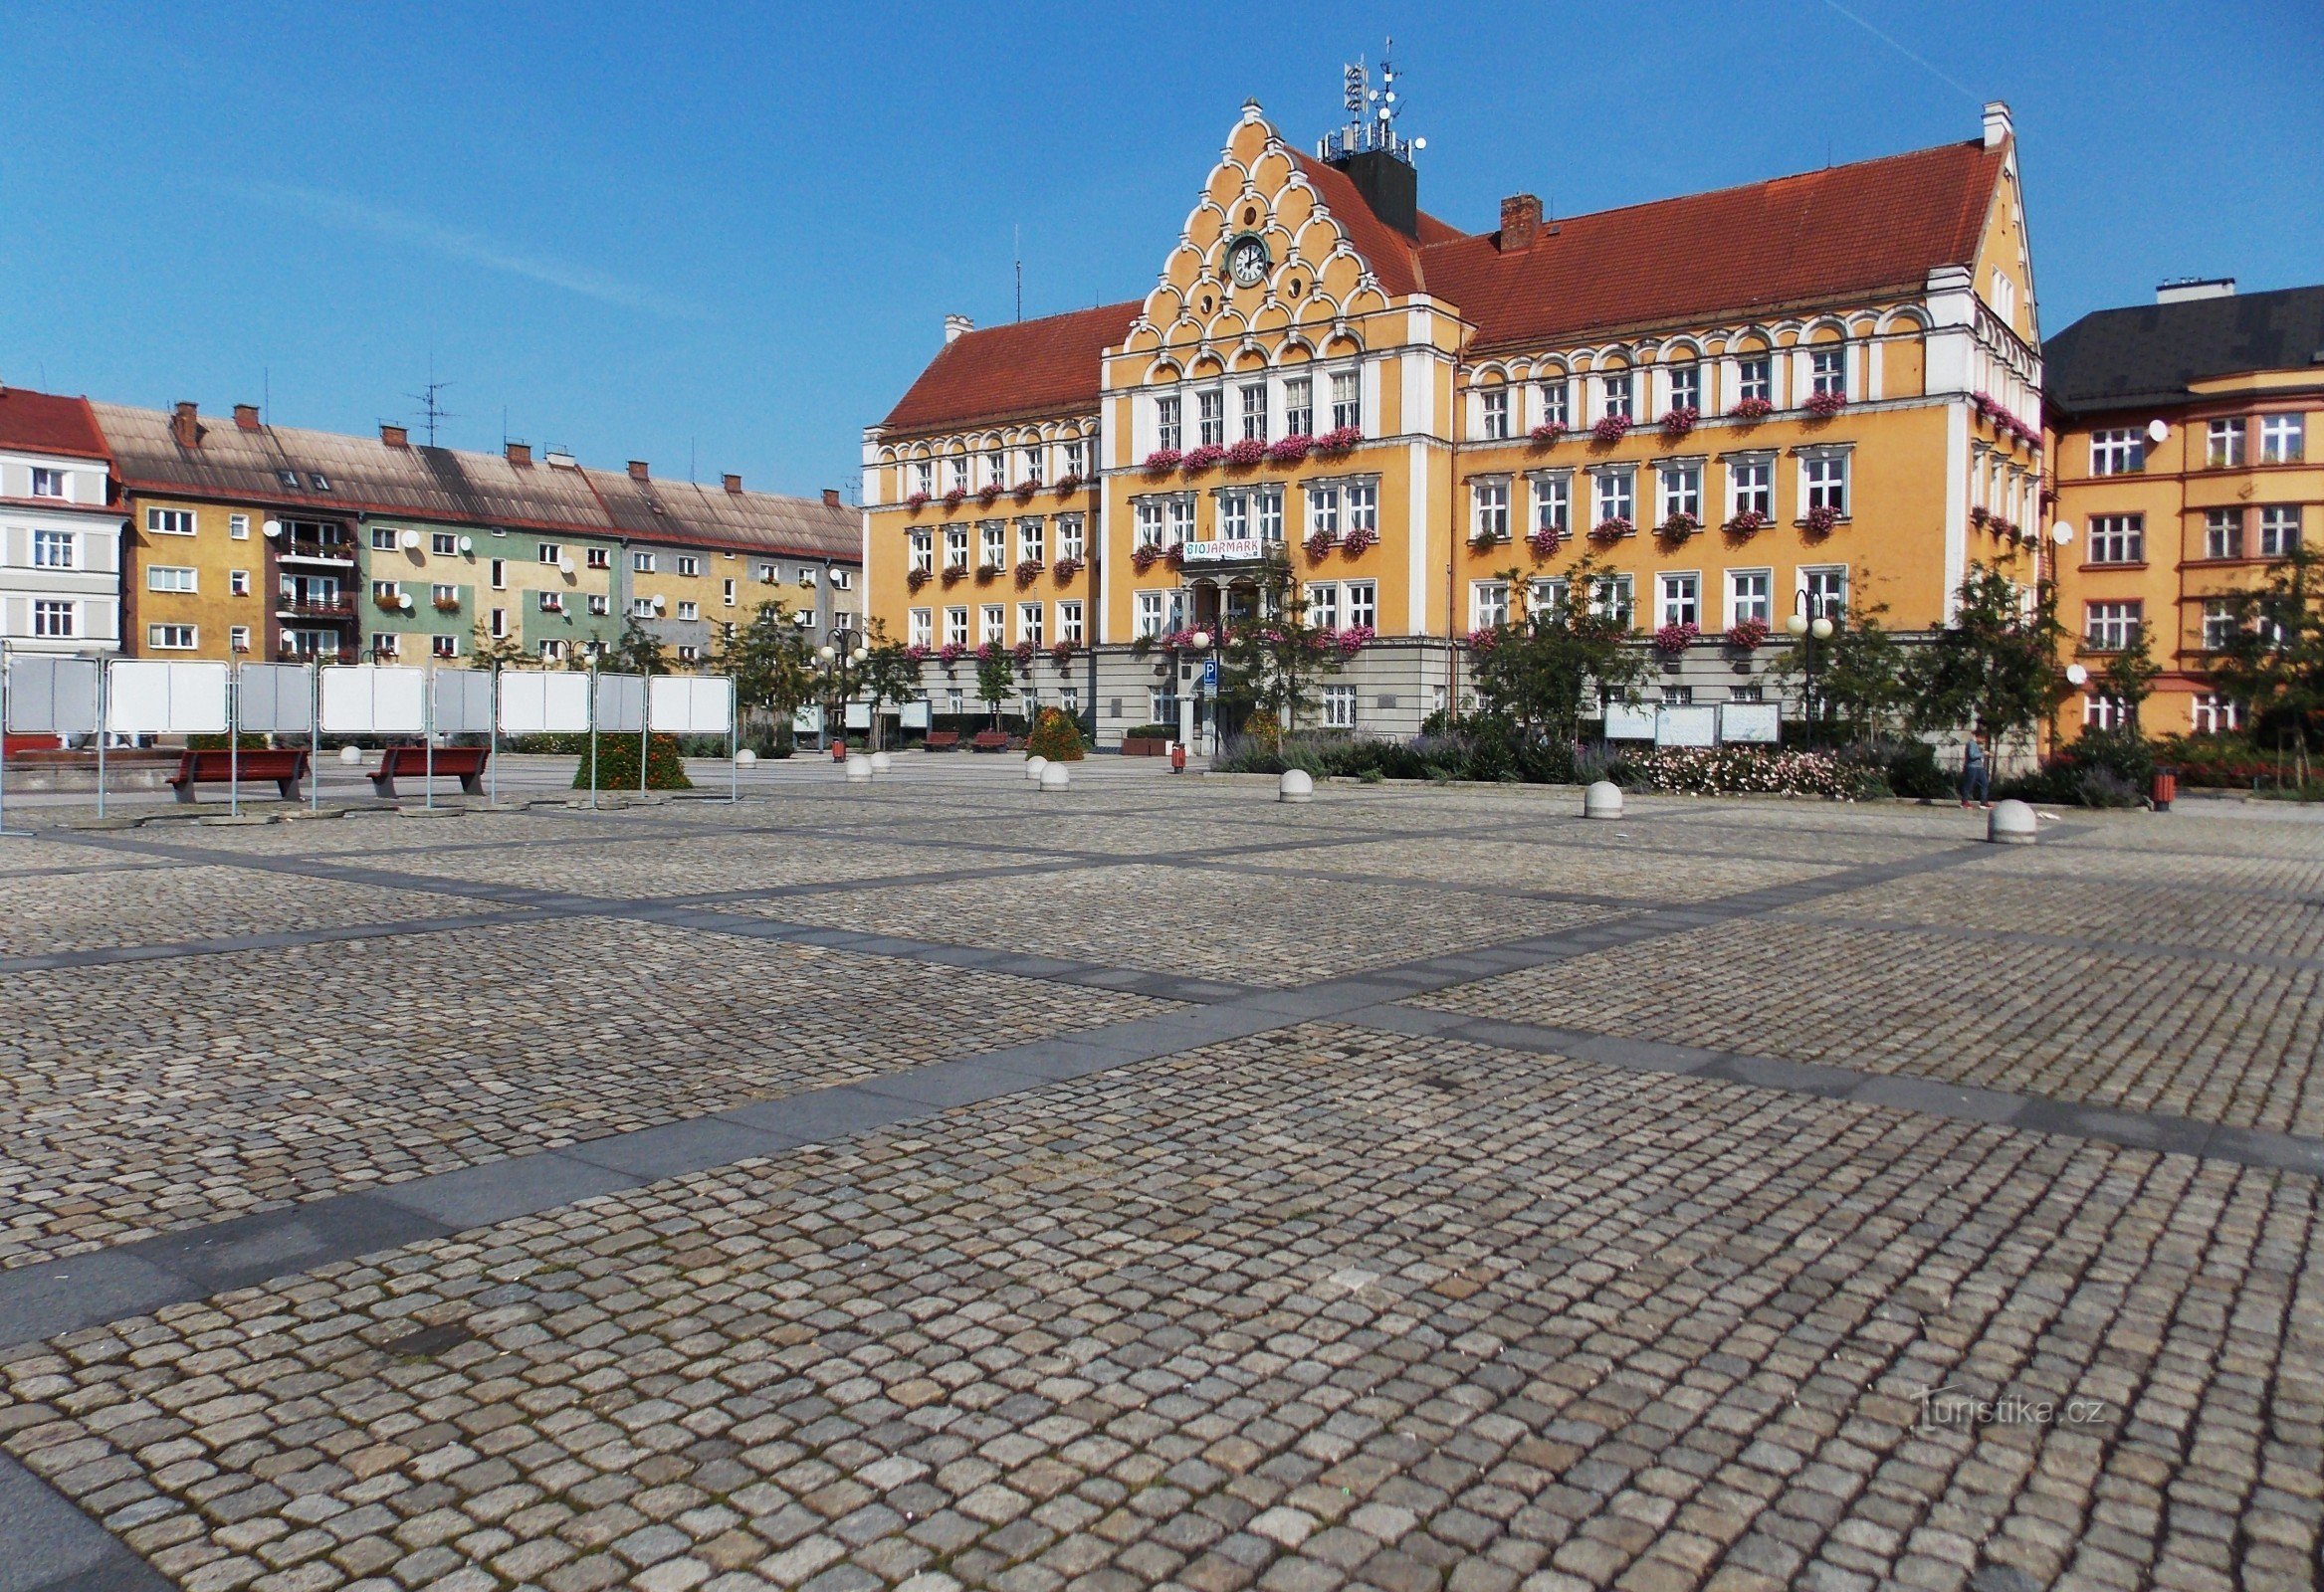 Těšín 广场的主要特色是市政厅大楼